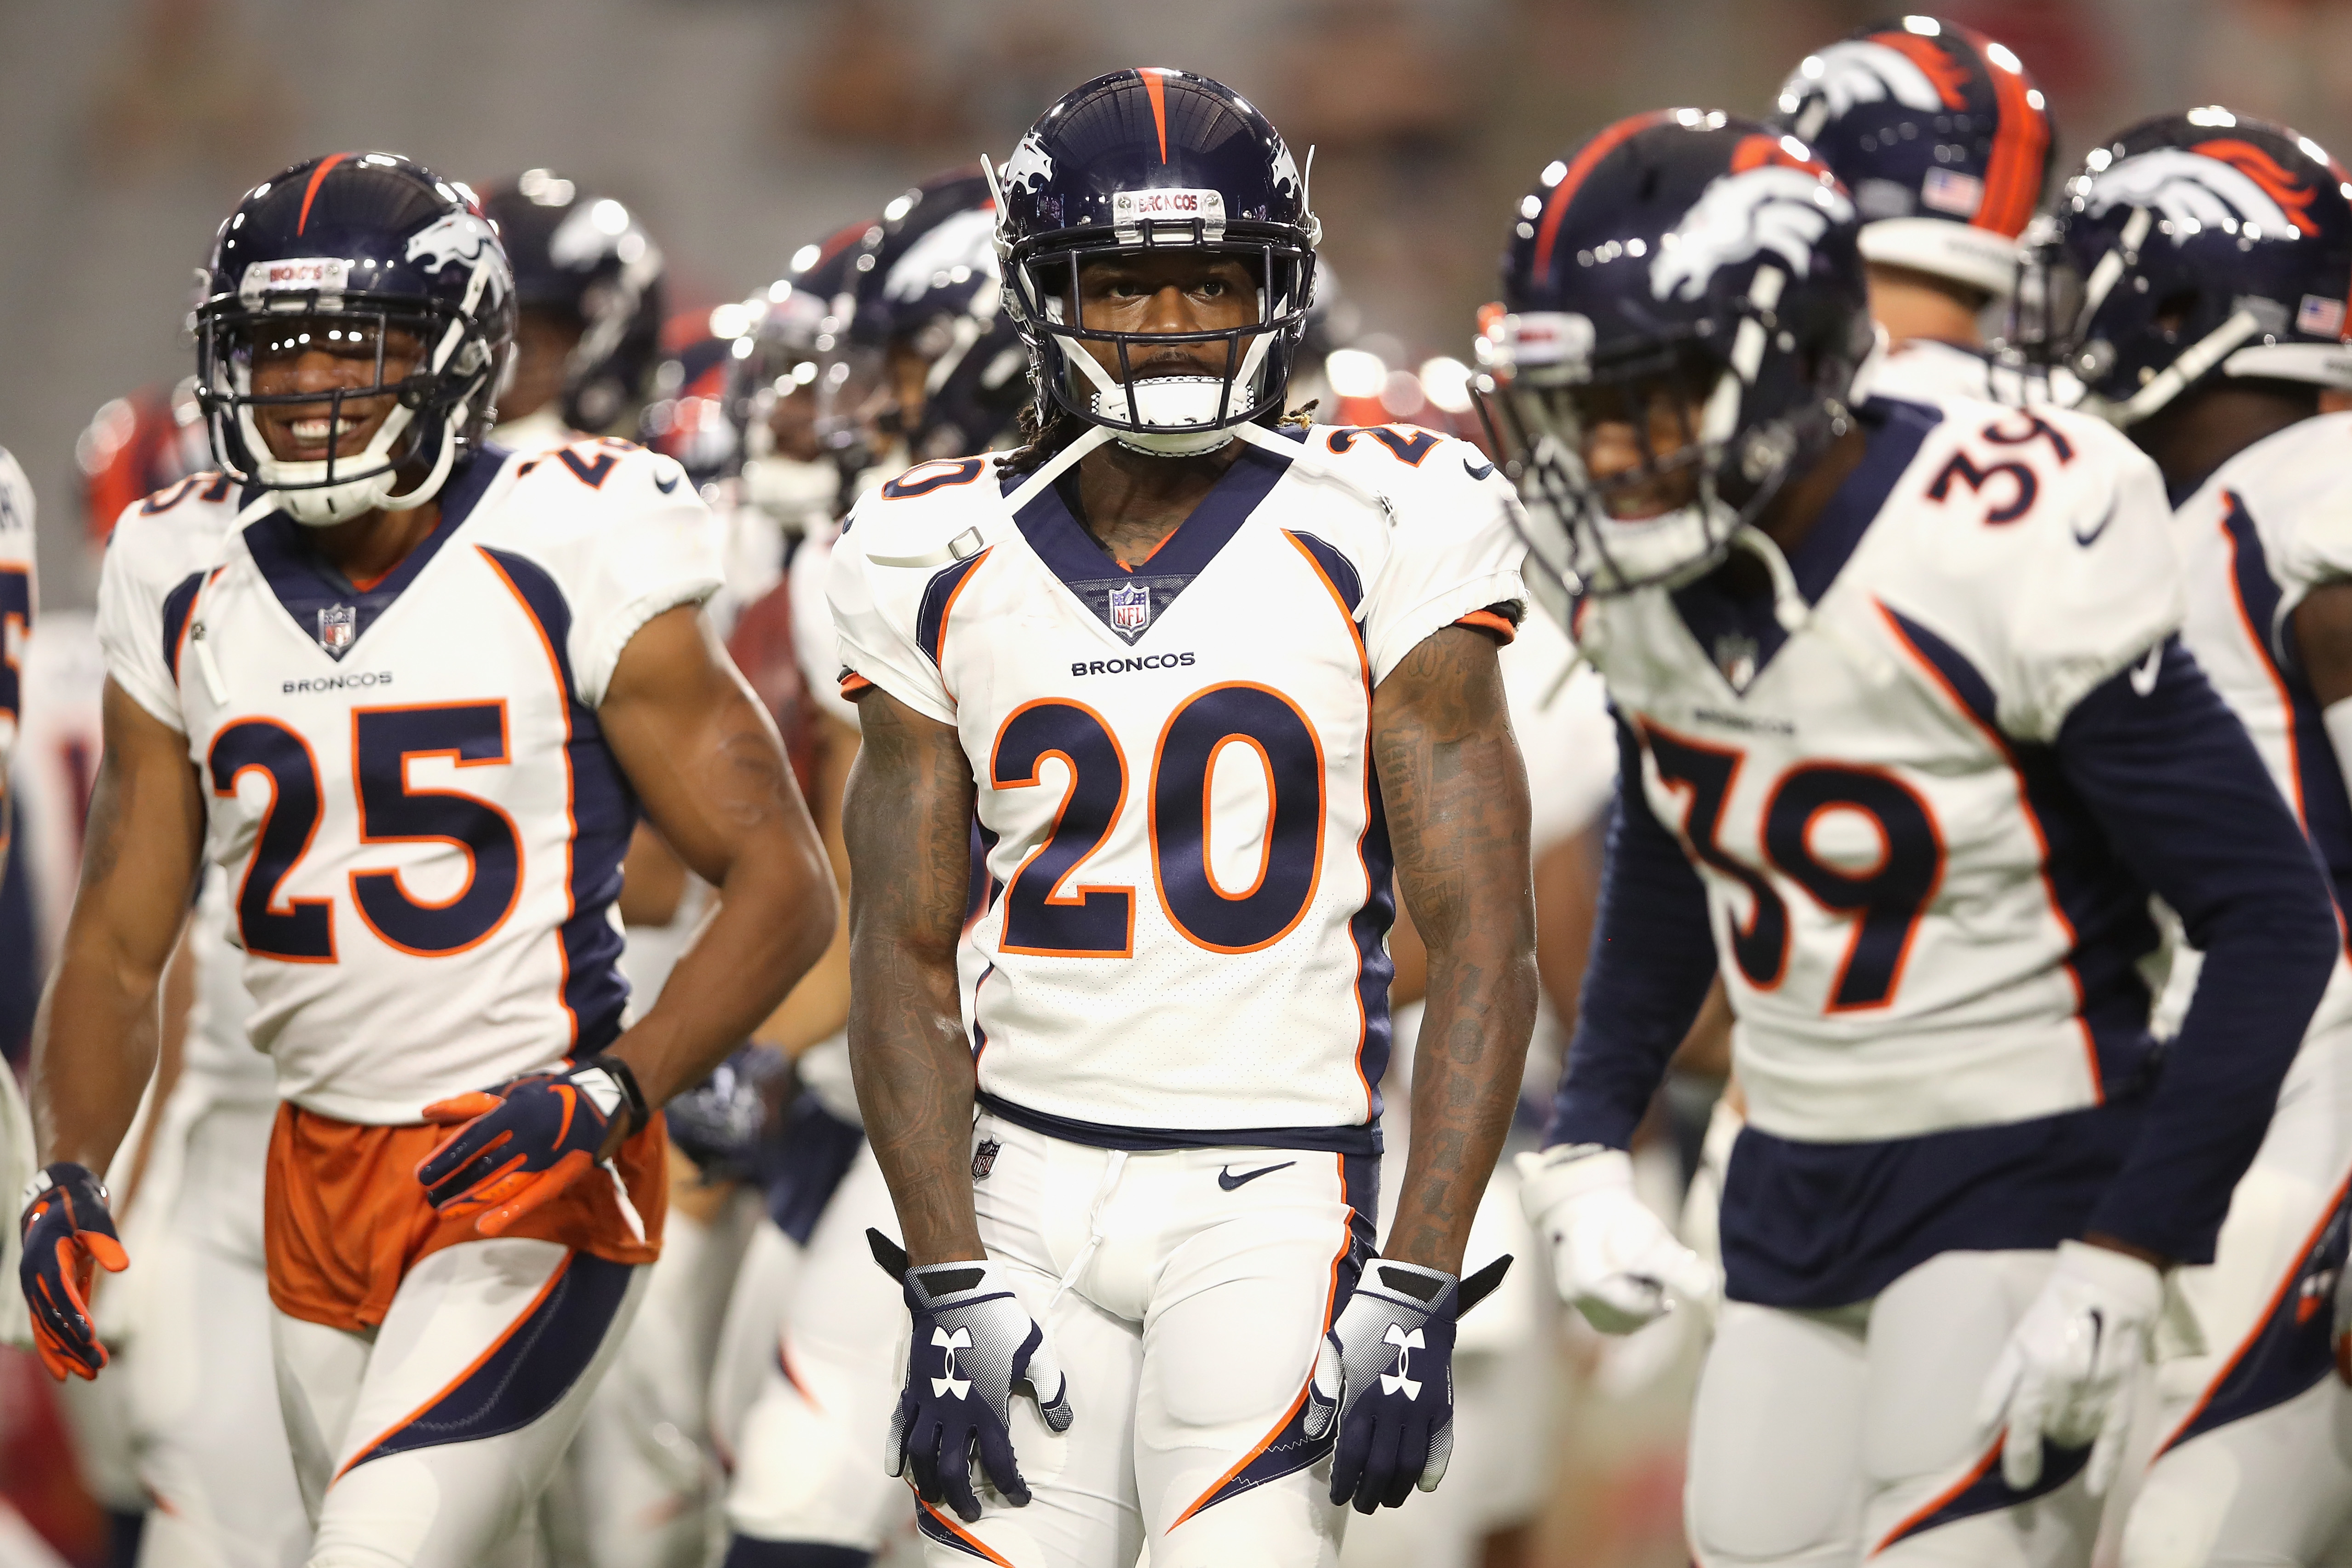 After Harris injury, should the Broncos bring back ‘Pacman’ Jones?